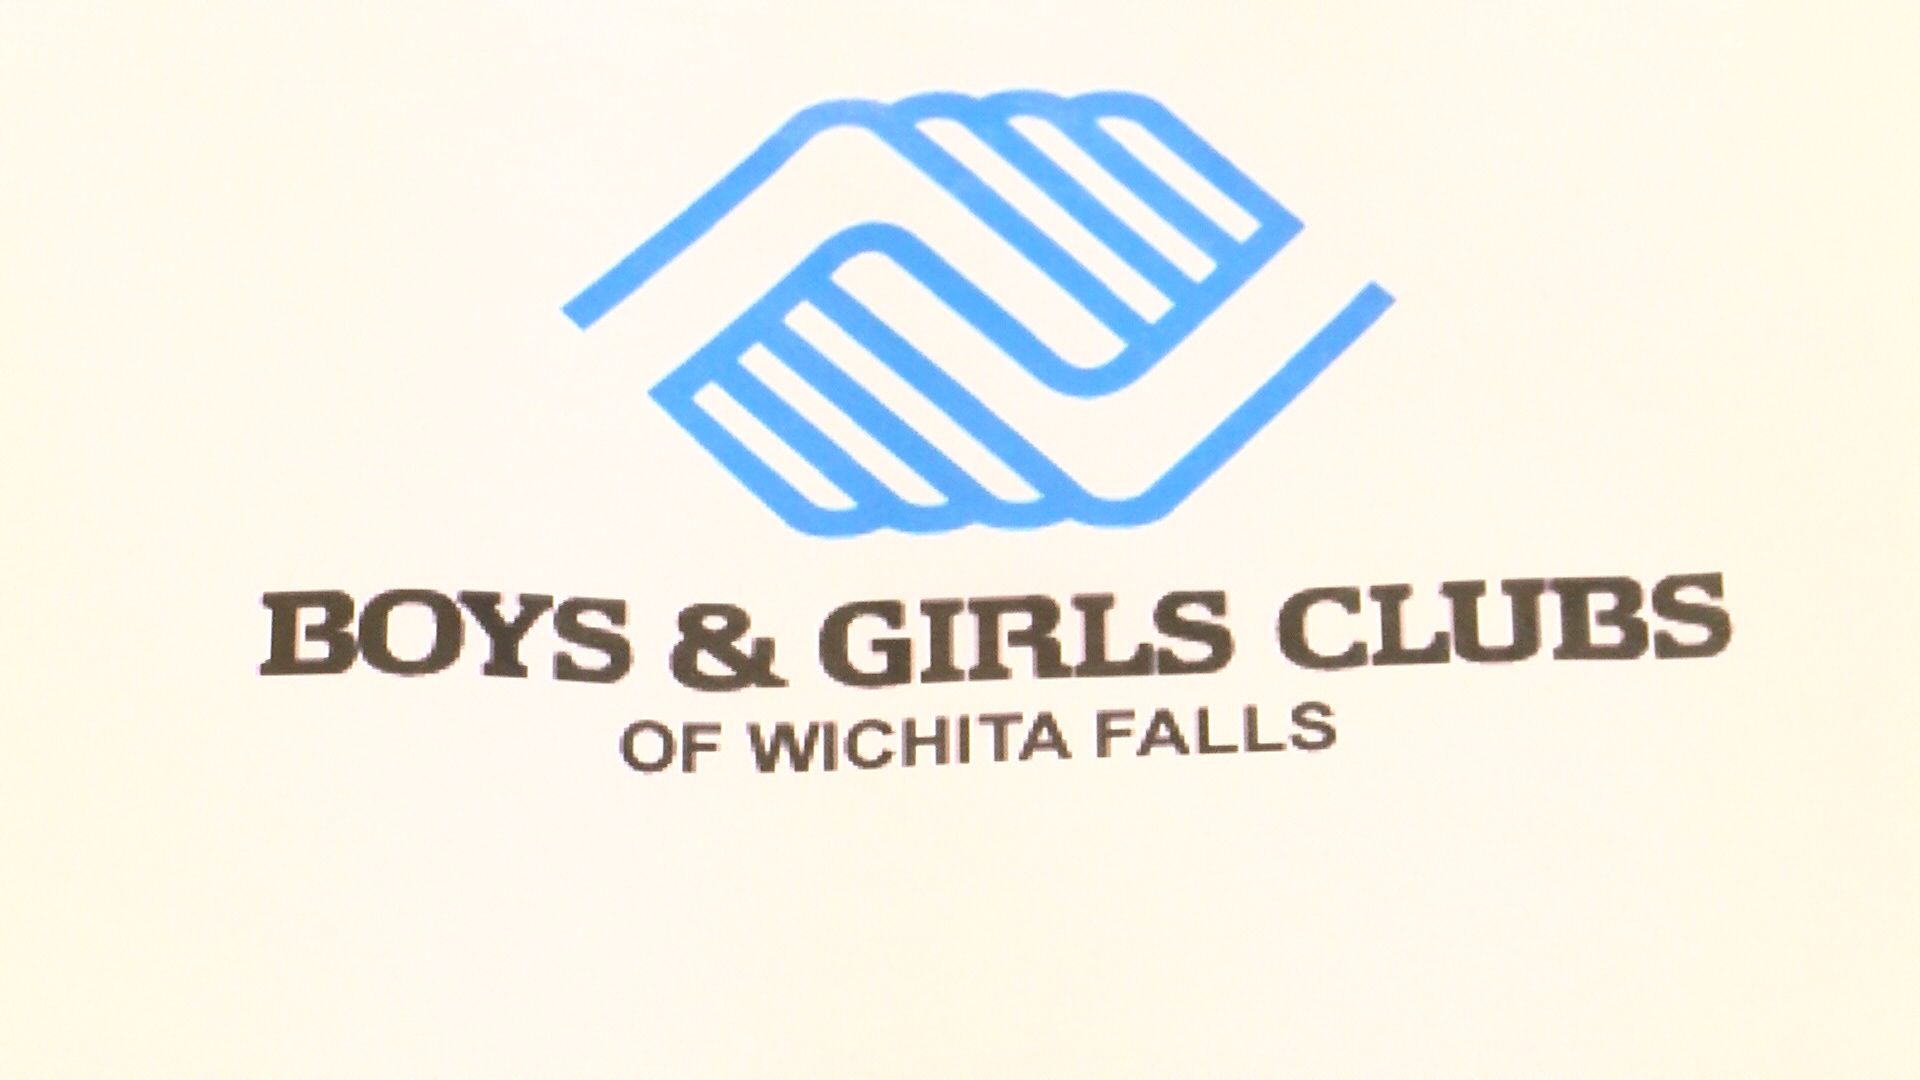 First Bank Of Wichita Falls Donates $30,000 To Boys & Girls Club